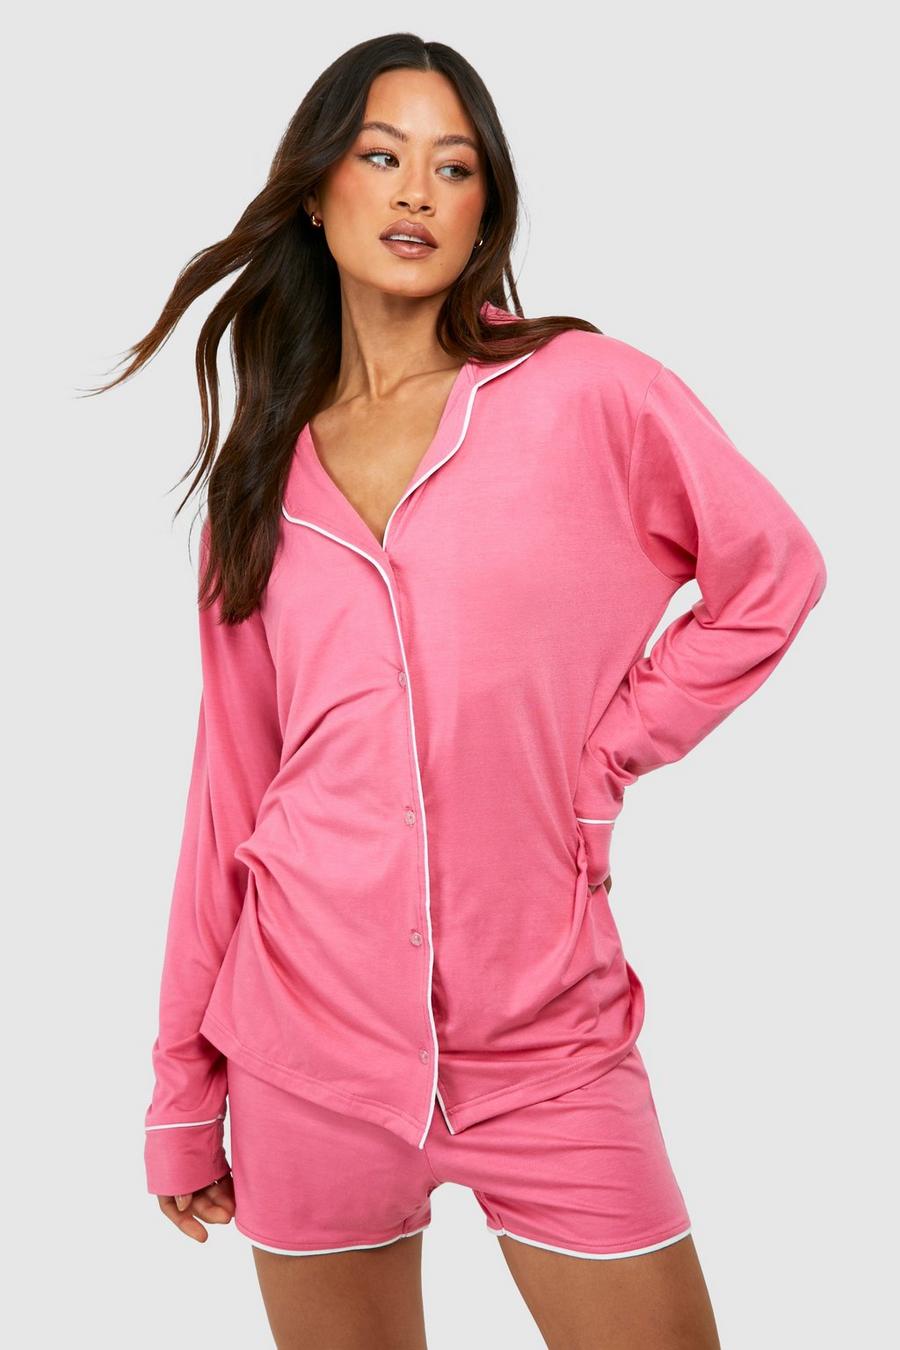 Hot pink casablanca lucid dreams short sleeve silk shirt m2s1 sh 003 pnk